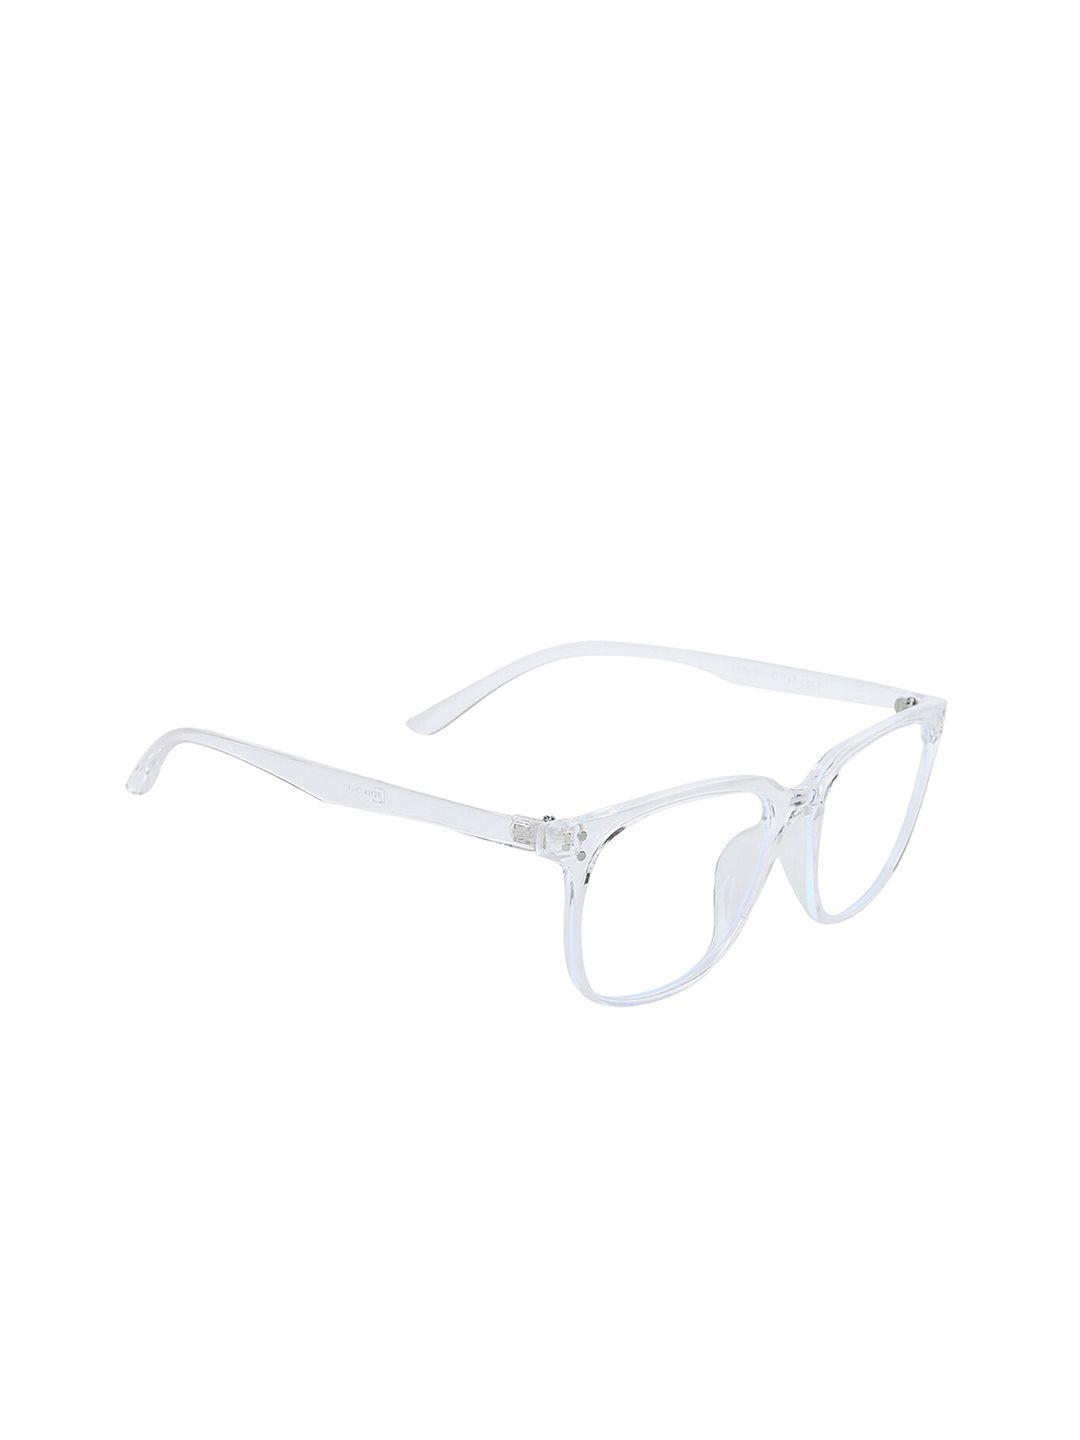 peter jones eyewear unisex transparent & white full rim square frames